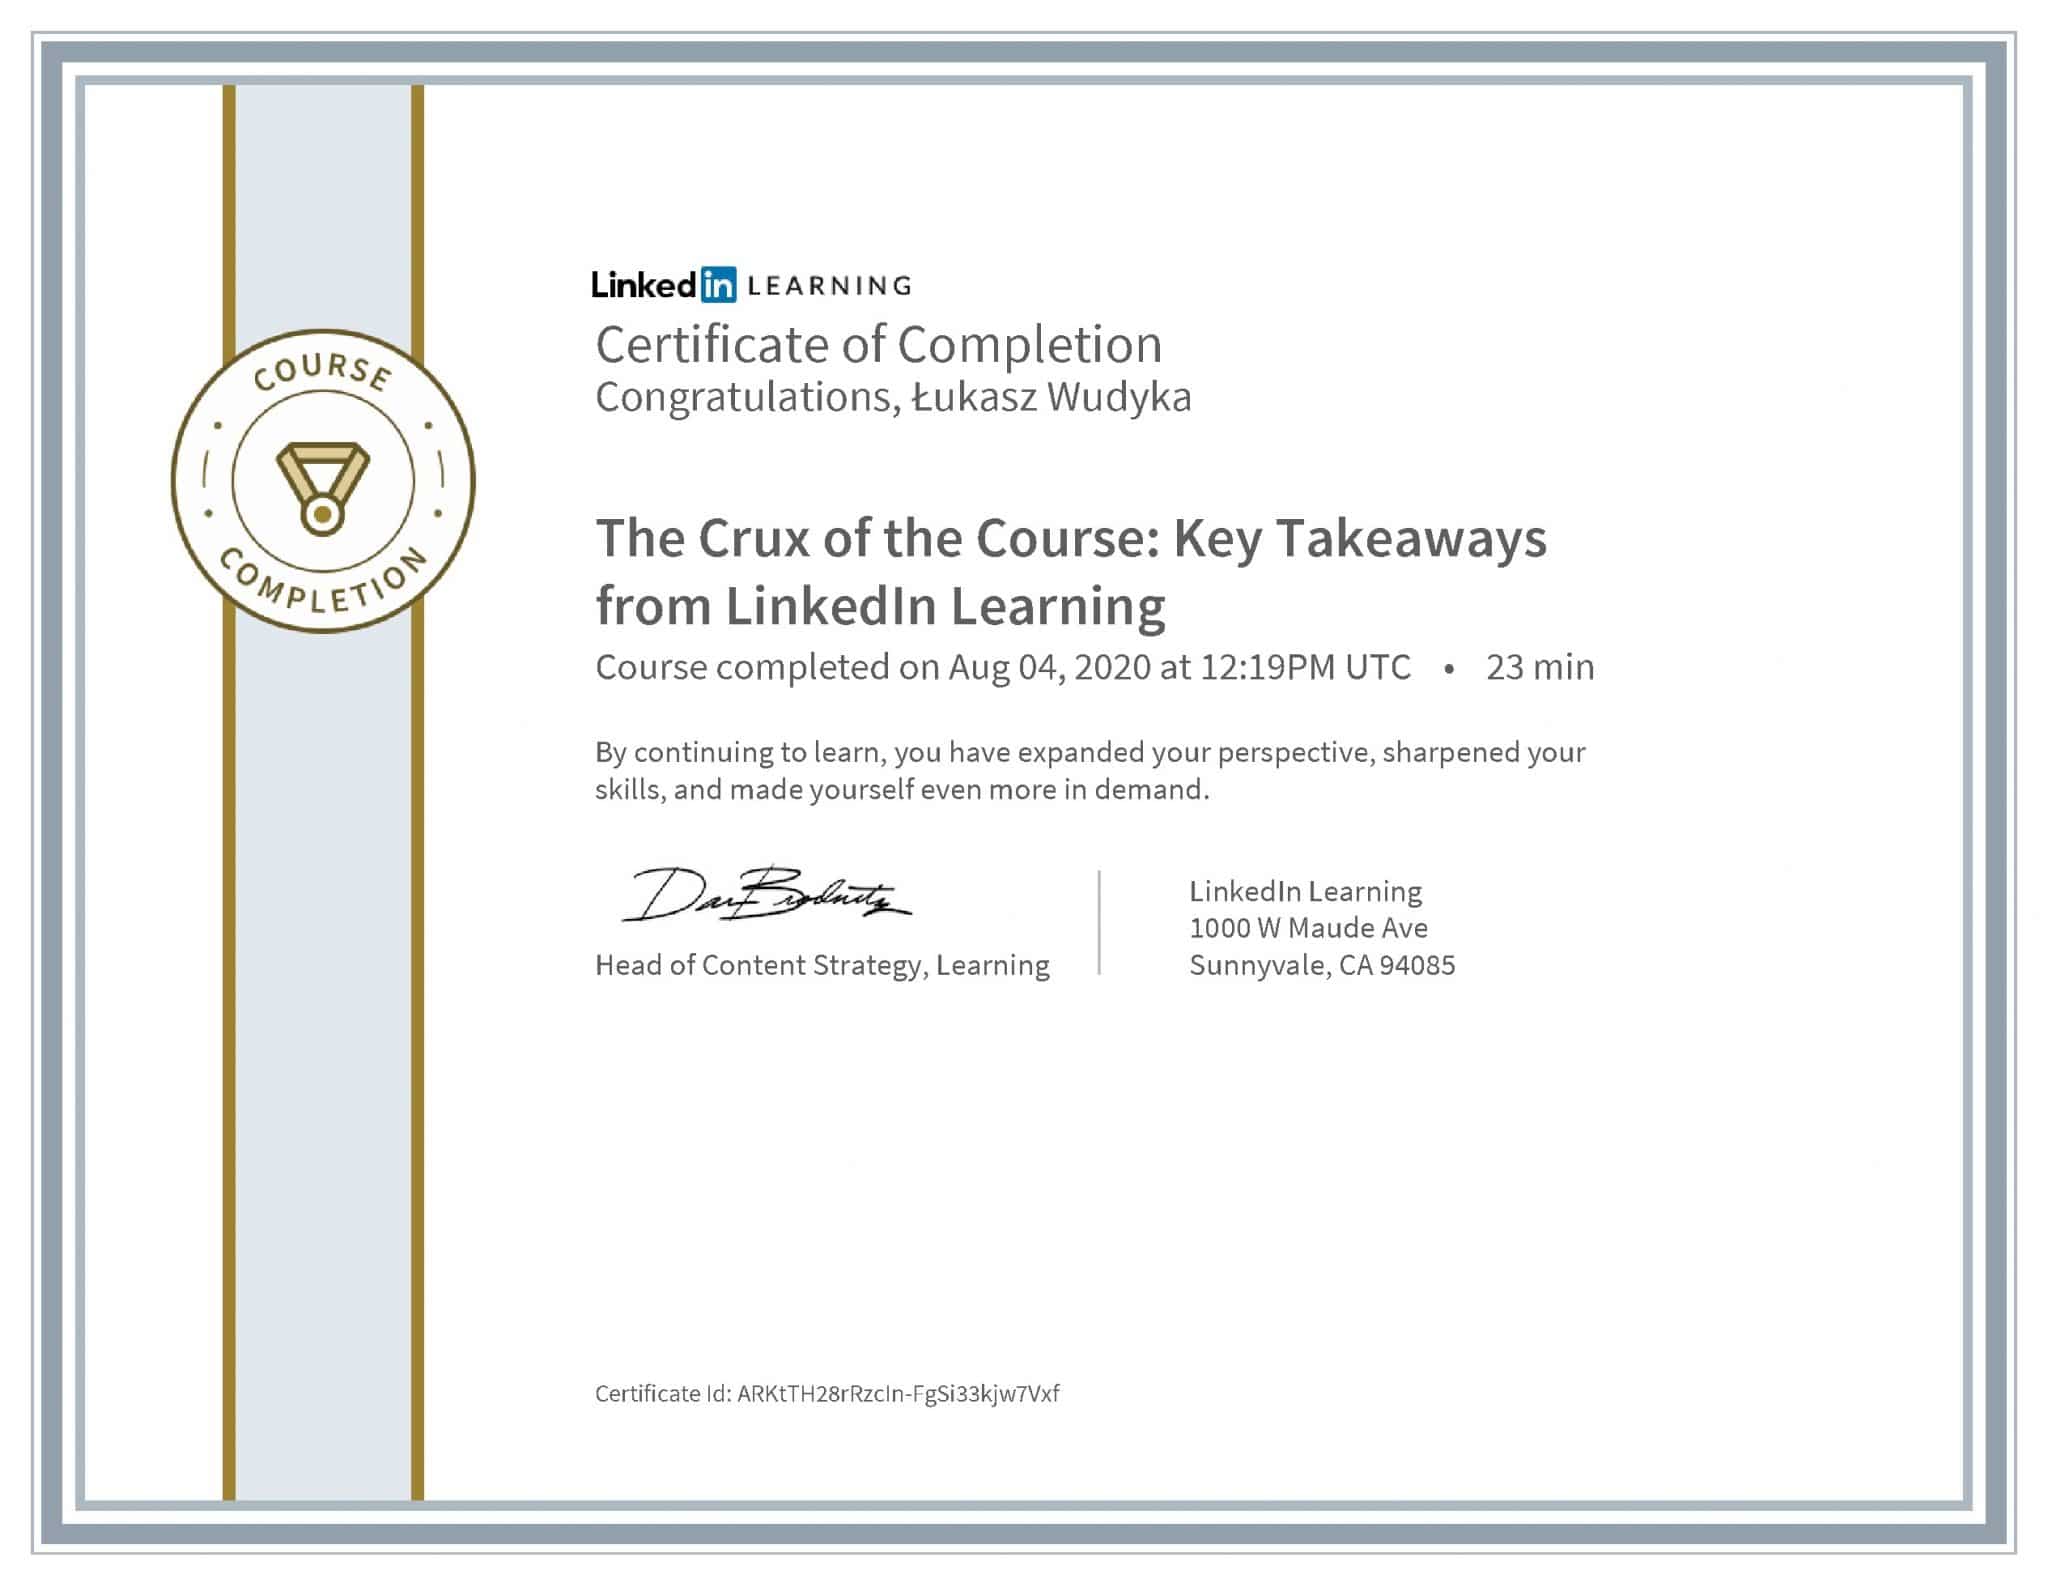 Łukasz Wudyka certyfikat LinkedIn The Crux of the Course: Key Takeaways from LinkedIn Learning